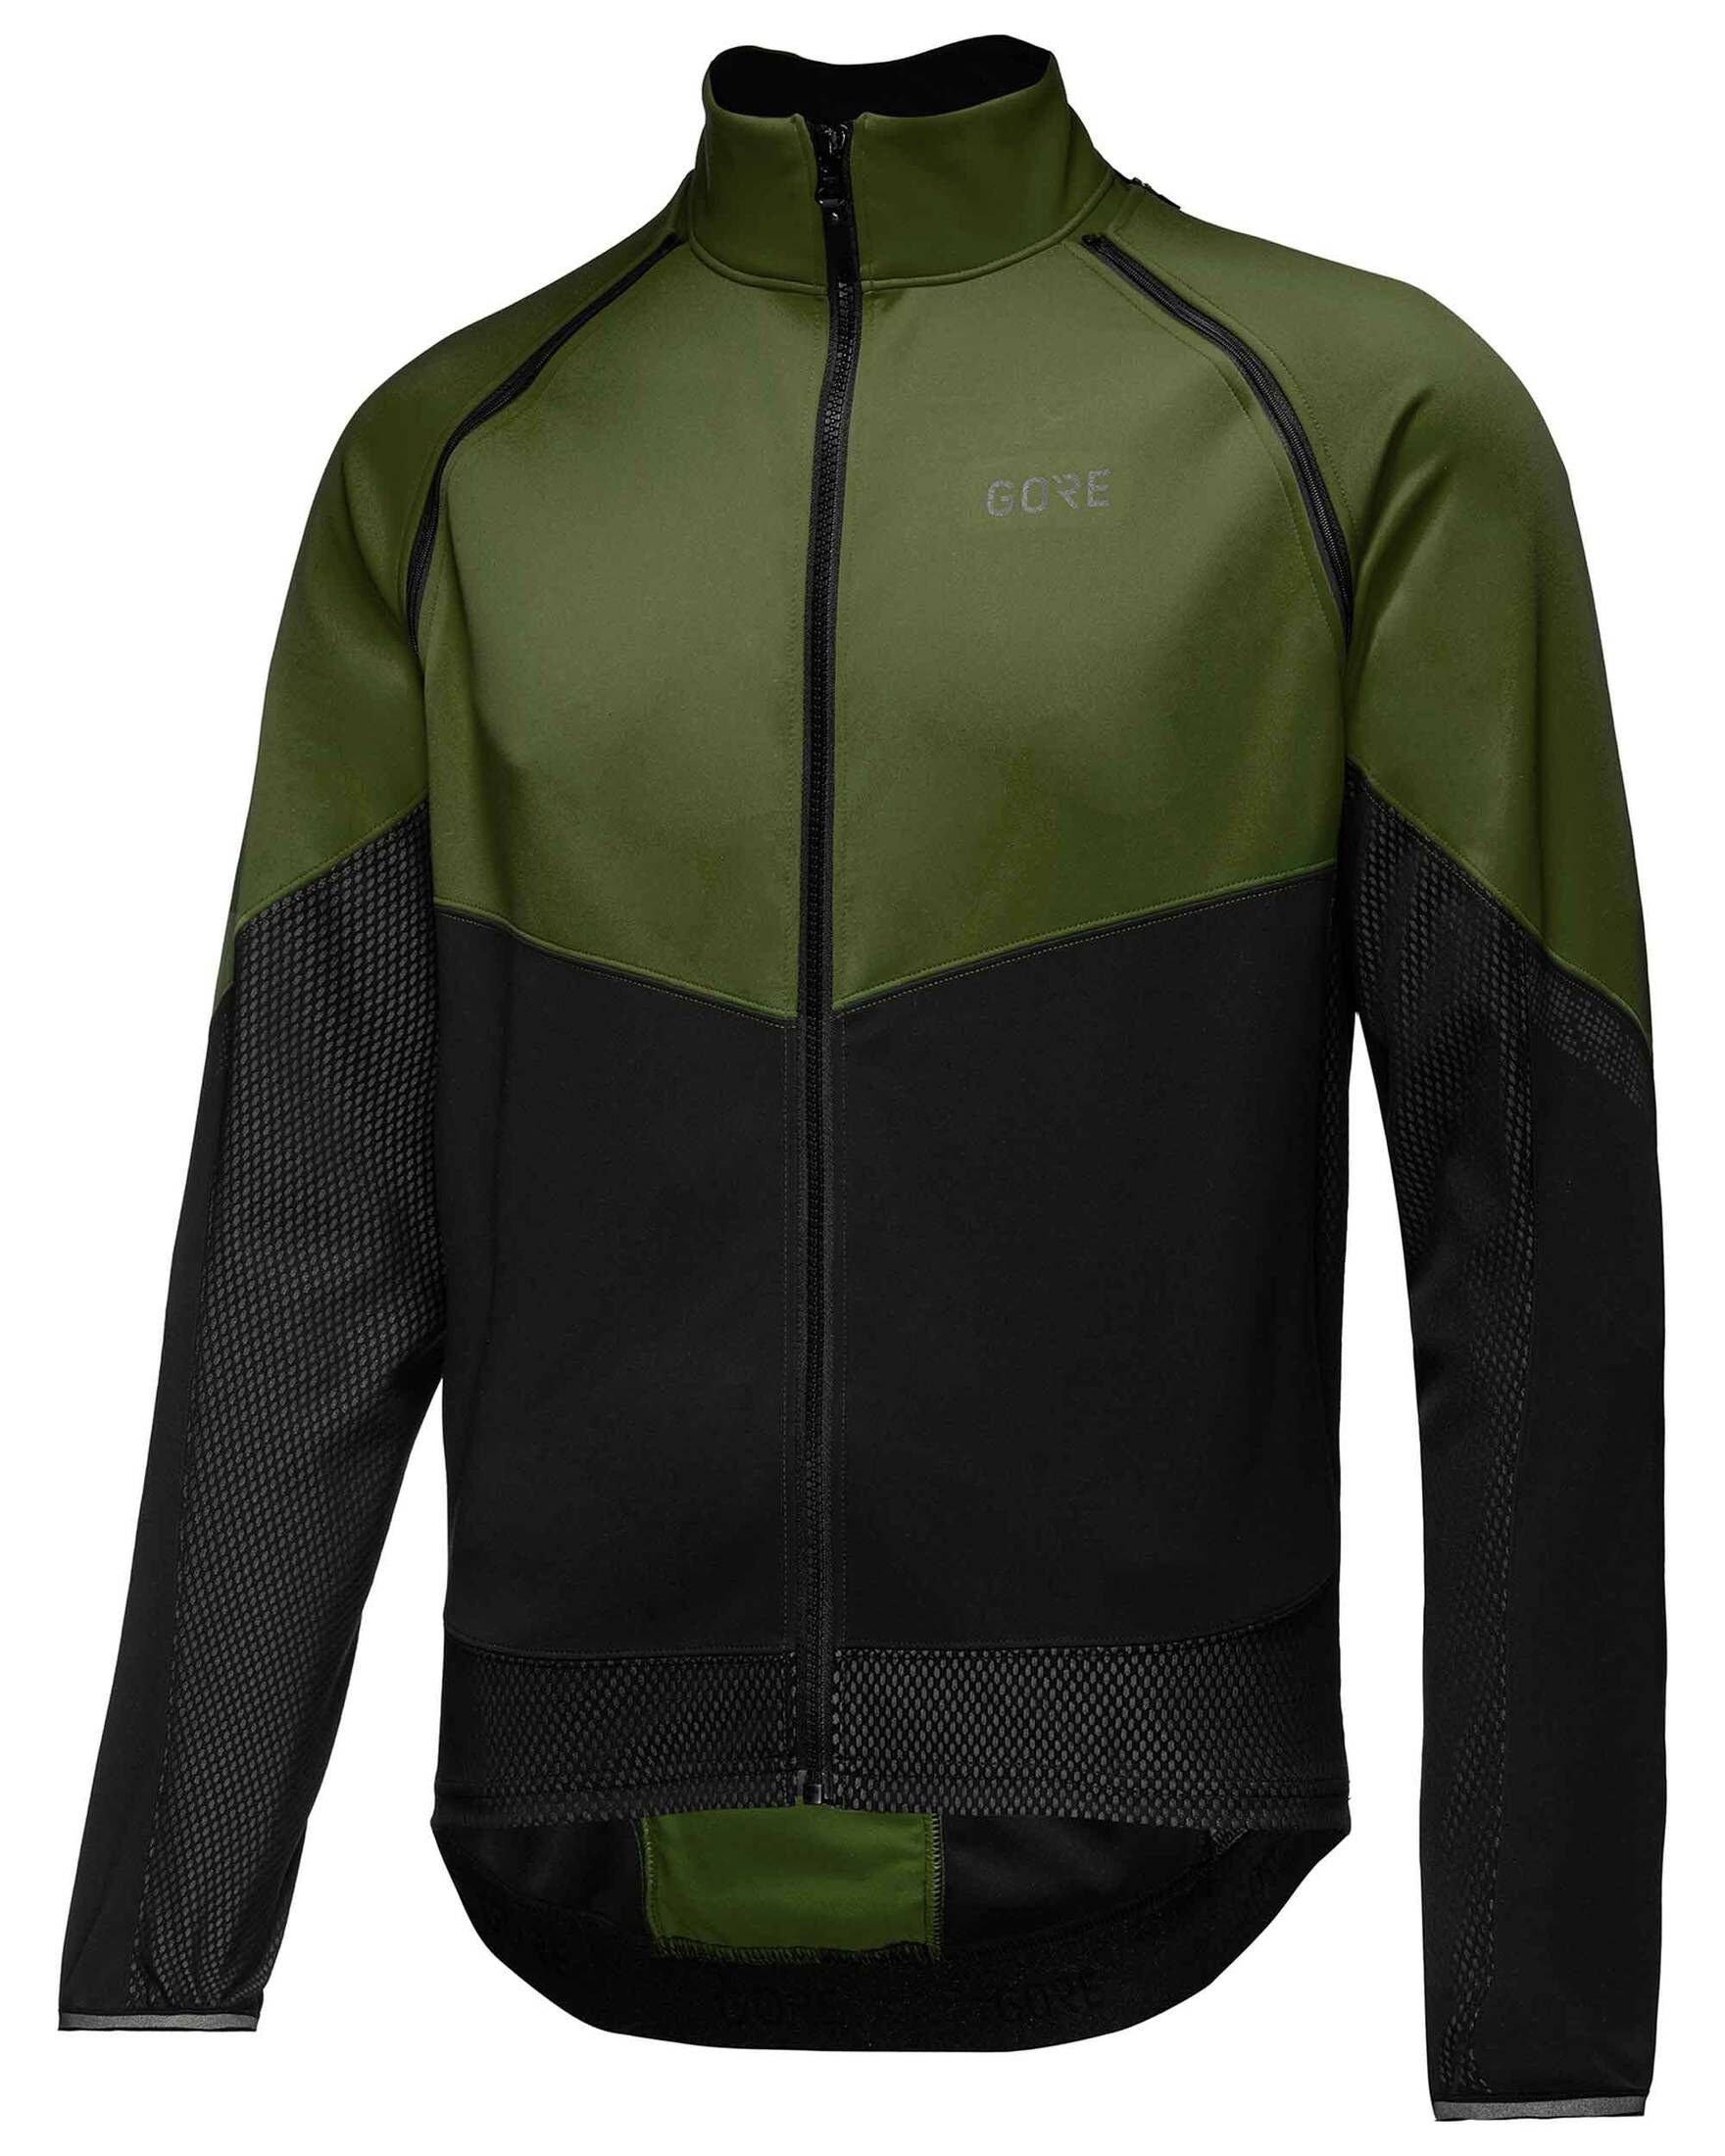 GORE® Wear Fahrradjacke Herren I Fahrradjacke grün/schwarz PHANTOM GTX (714)